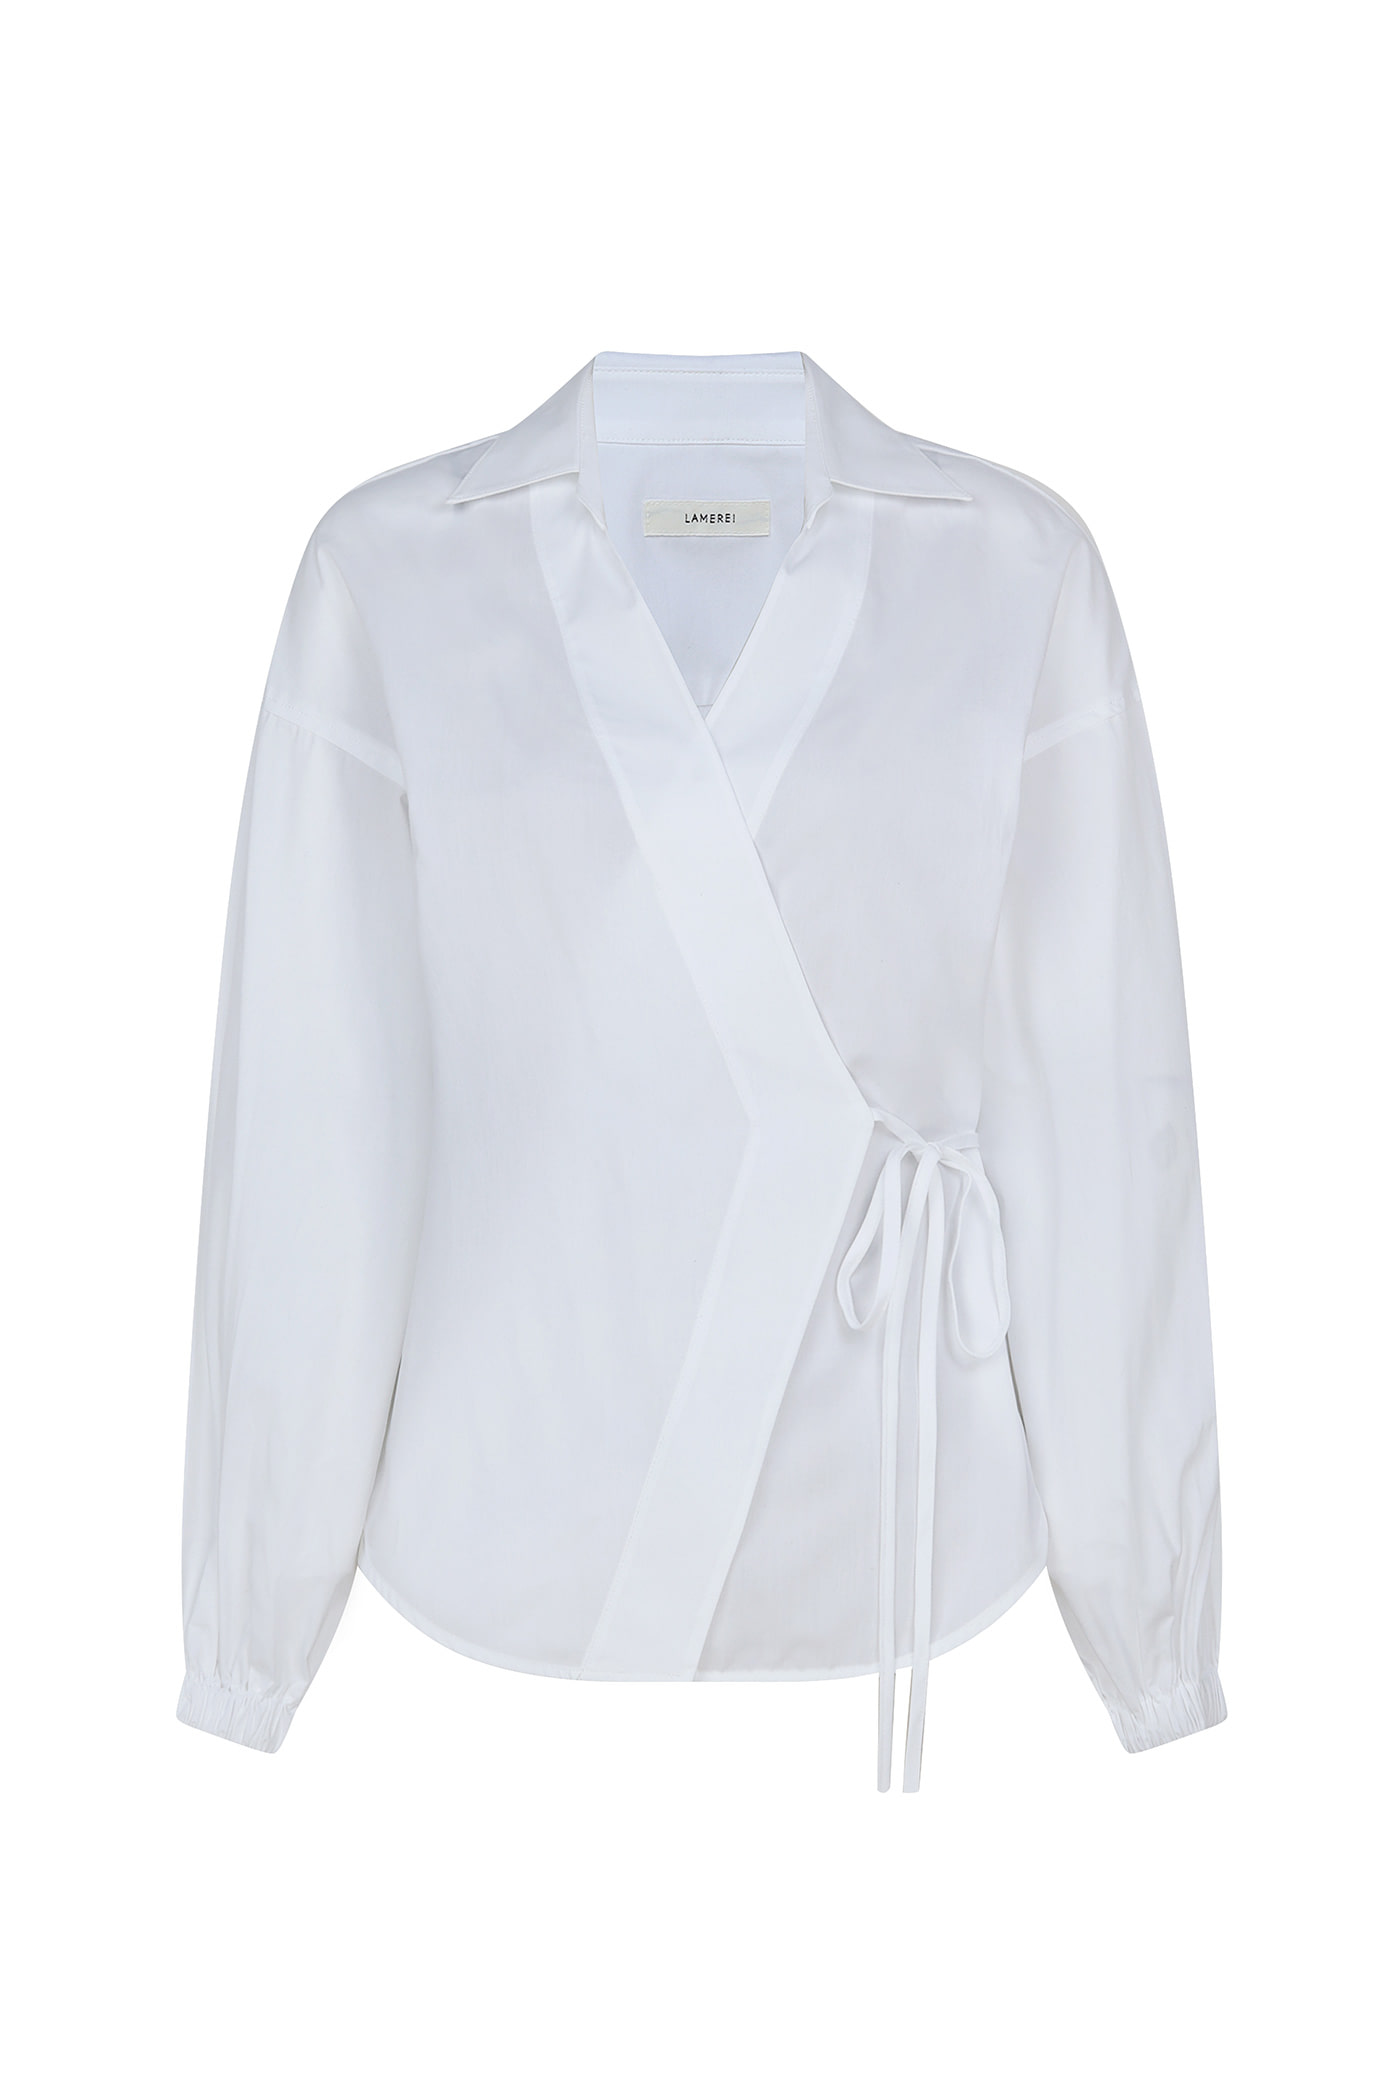 [SAMPLE]Cotton Lap Shirt-White